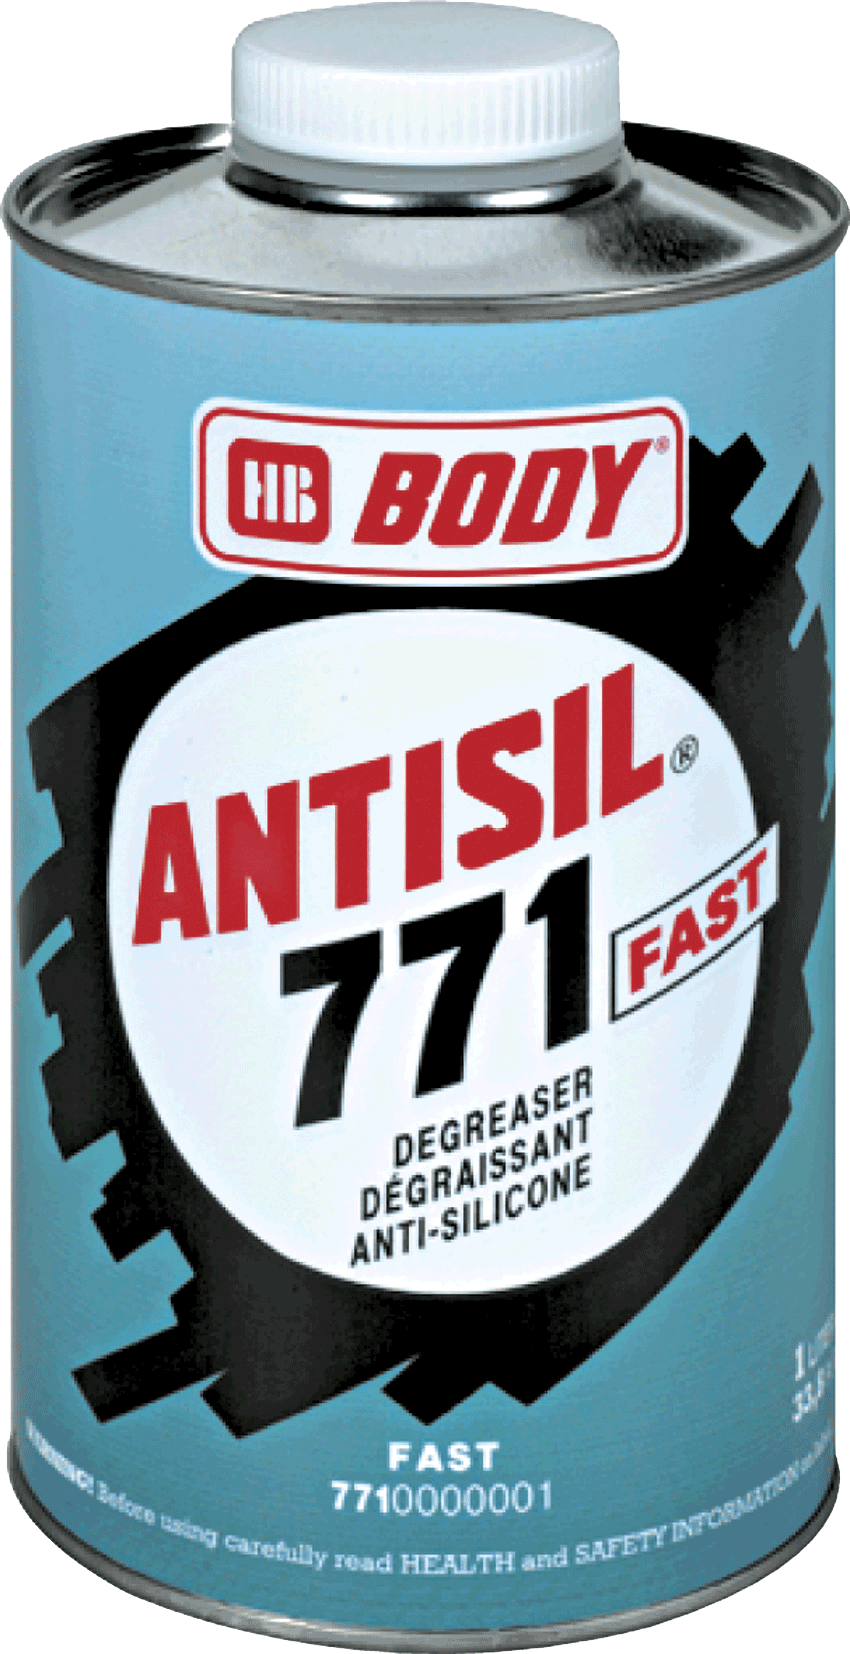 HB BODY Body 771 Antisil fast  1L